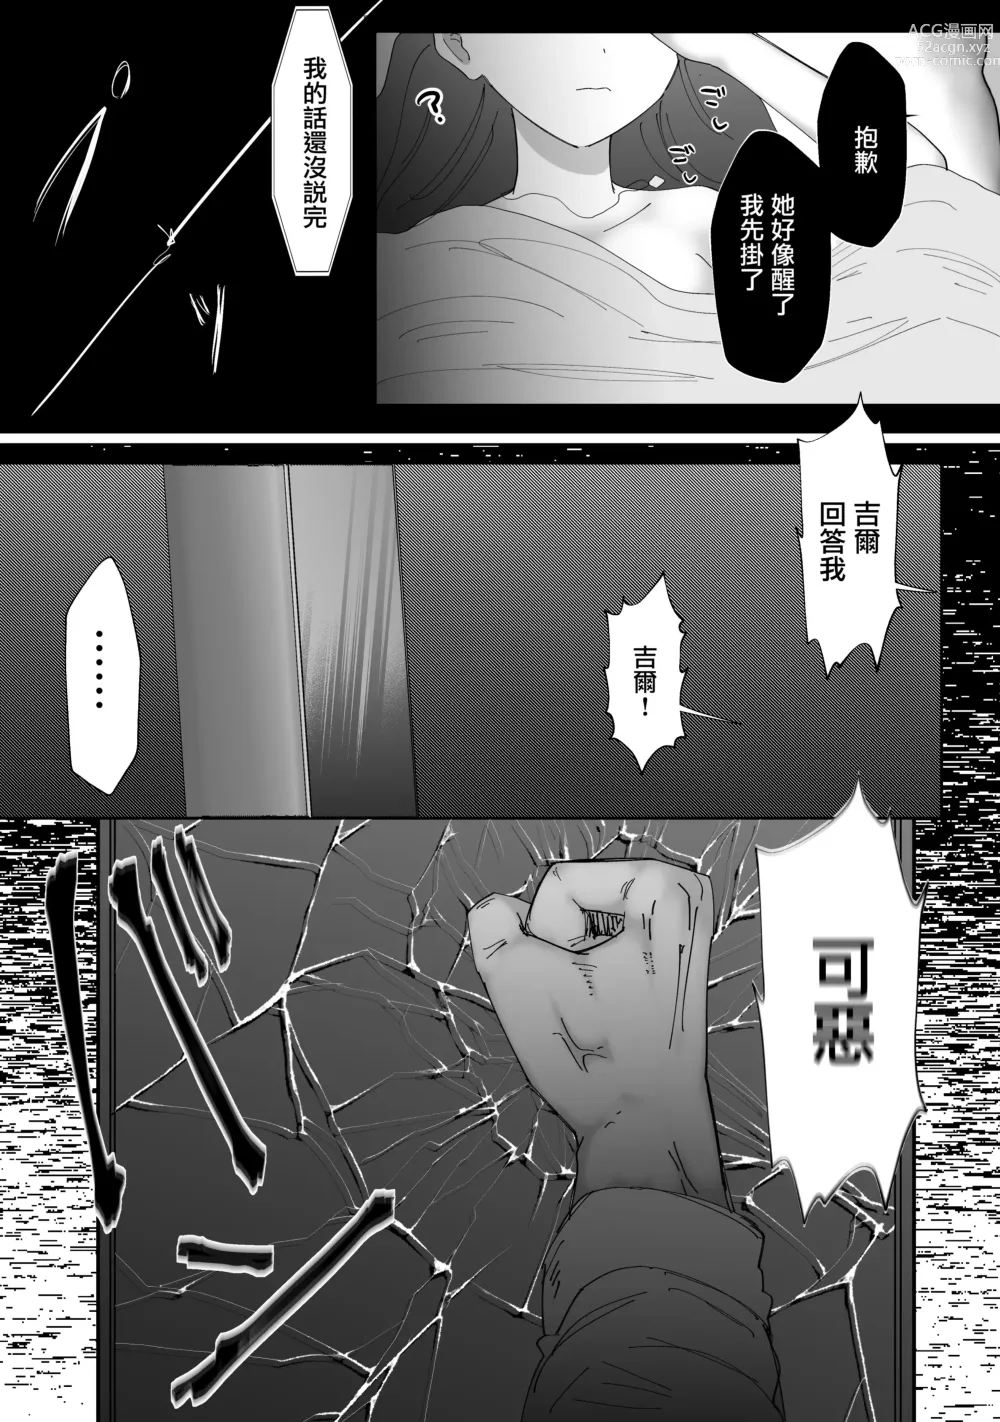 Page 58 of doujinshi 直至黑百合凋零之际〜园丁的心脏篇〜